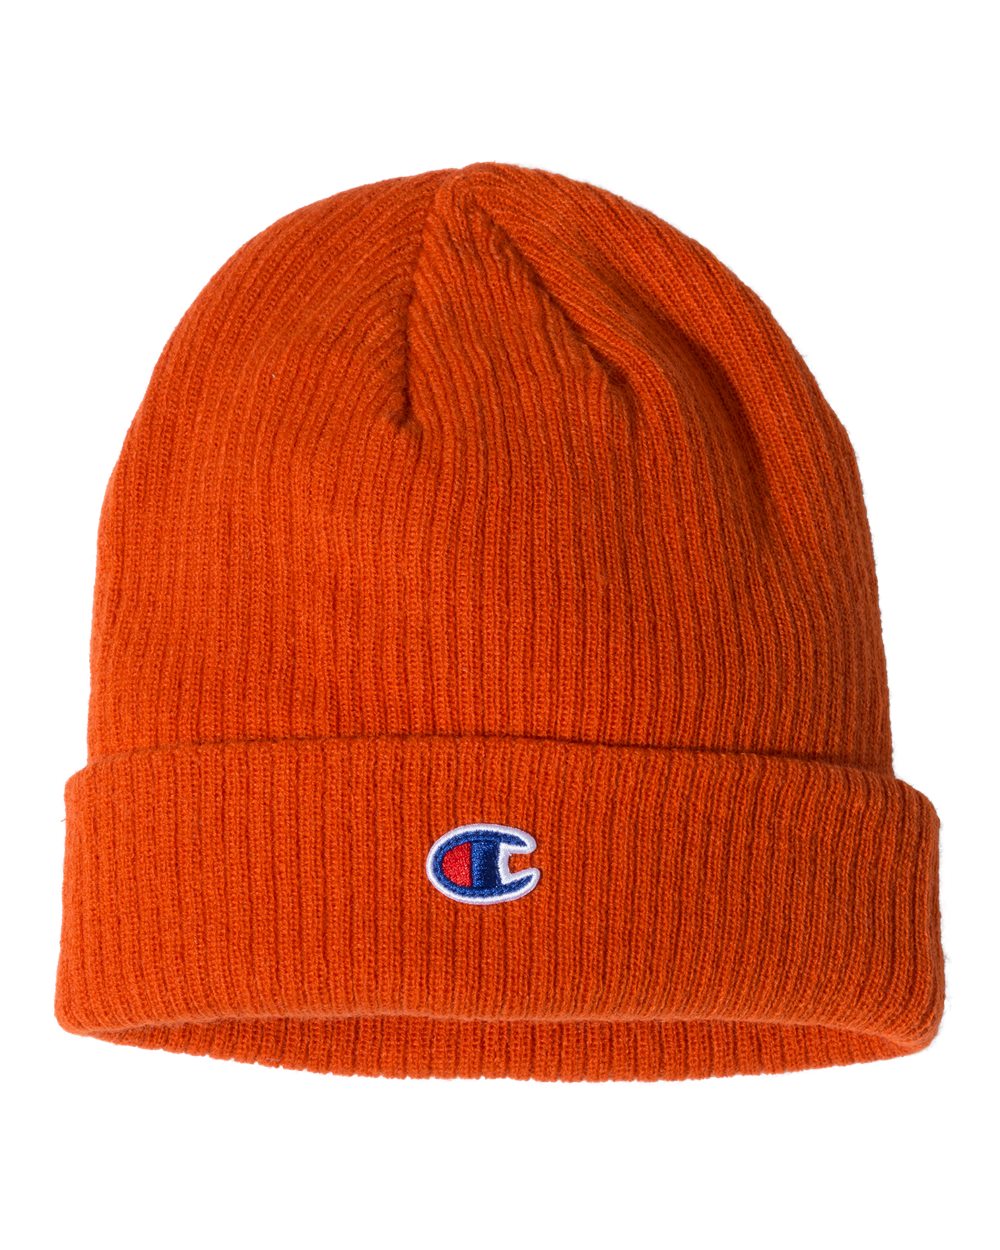 Champion Ribbed Cuffed Beanie- Spicy Orange - Ten Gallon Hat Co.